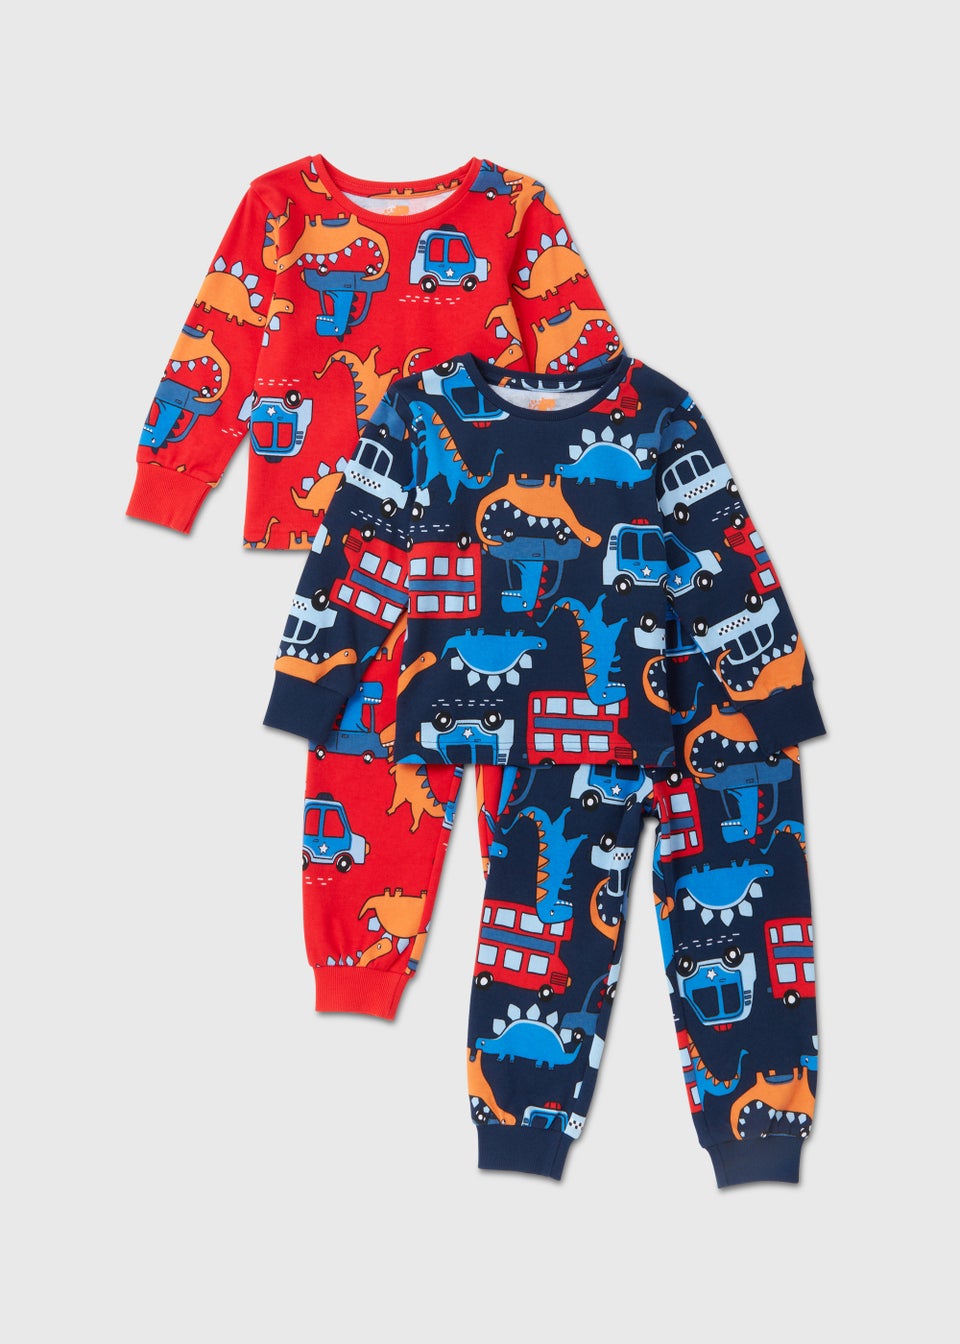 Boys Navy Dinosaur & Transport Print Pyjama Sets (9ths-5yrs)